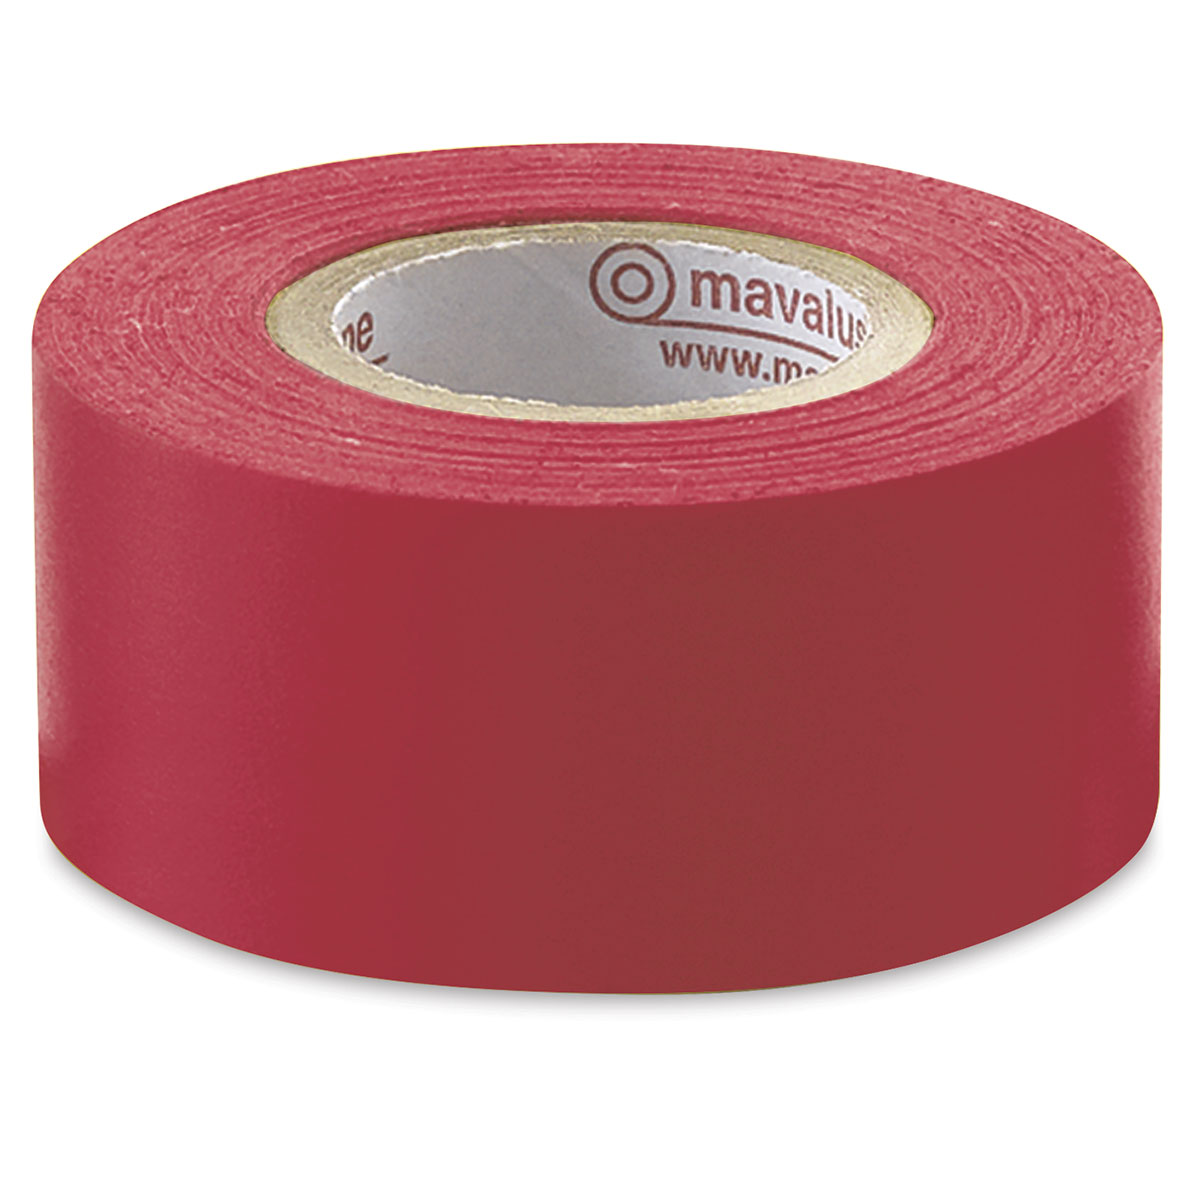 Mavalus Tape 1 Red